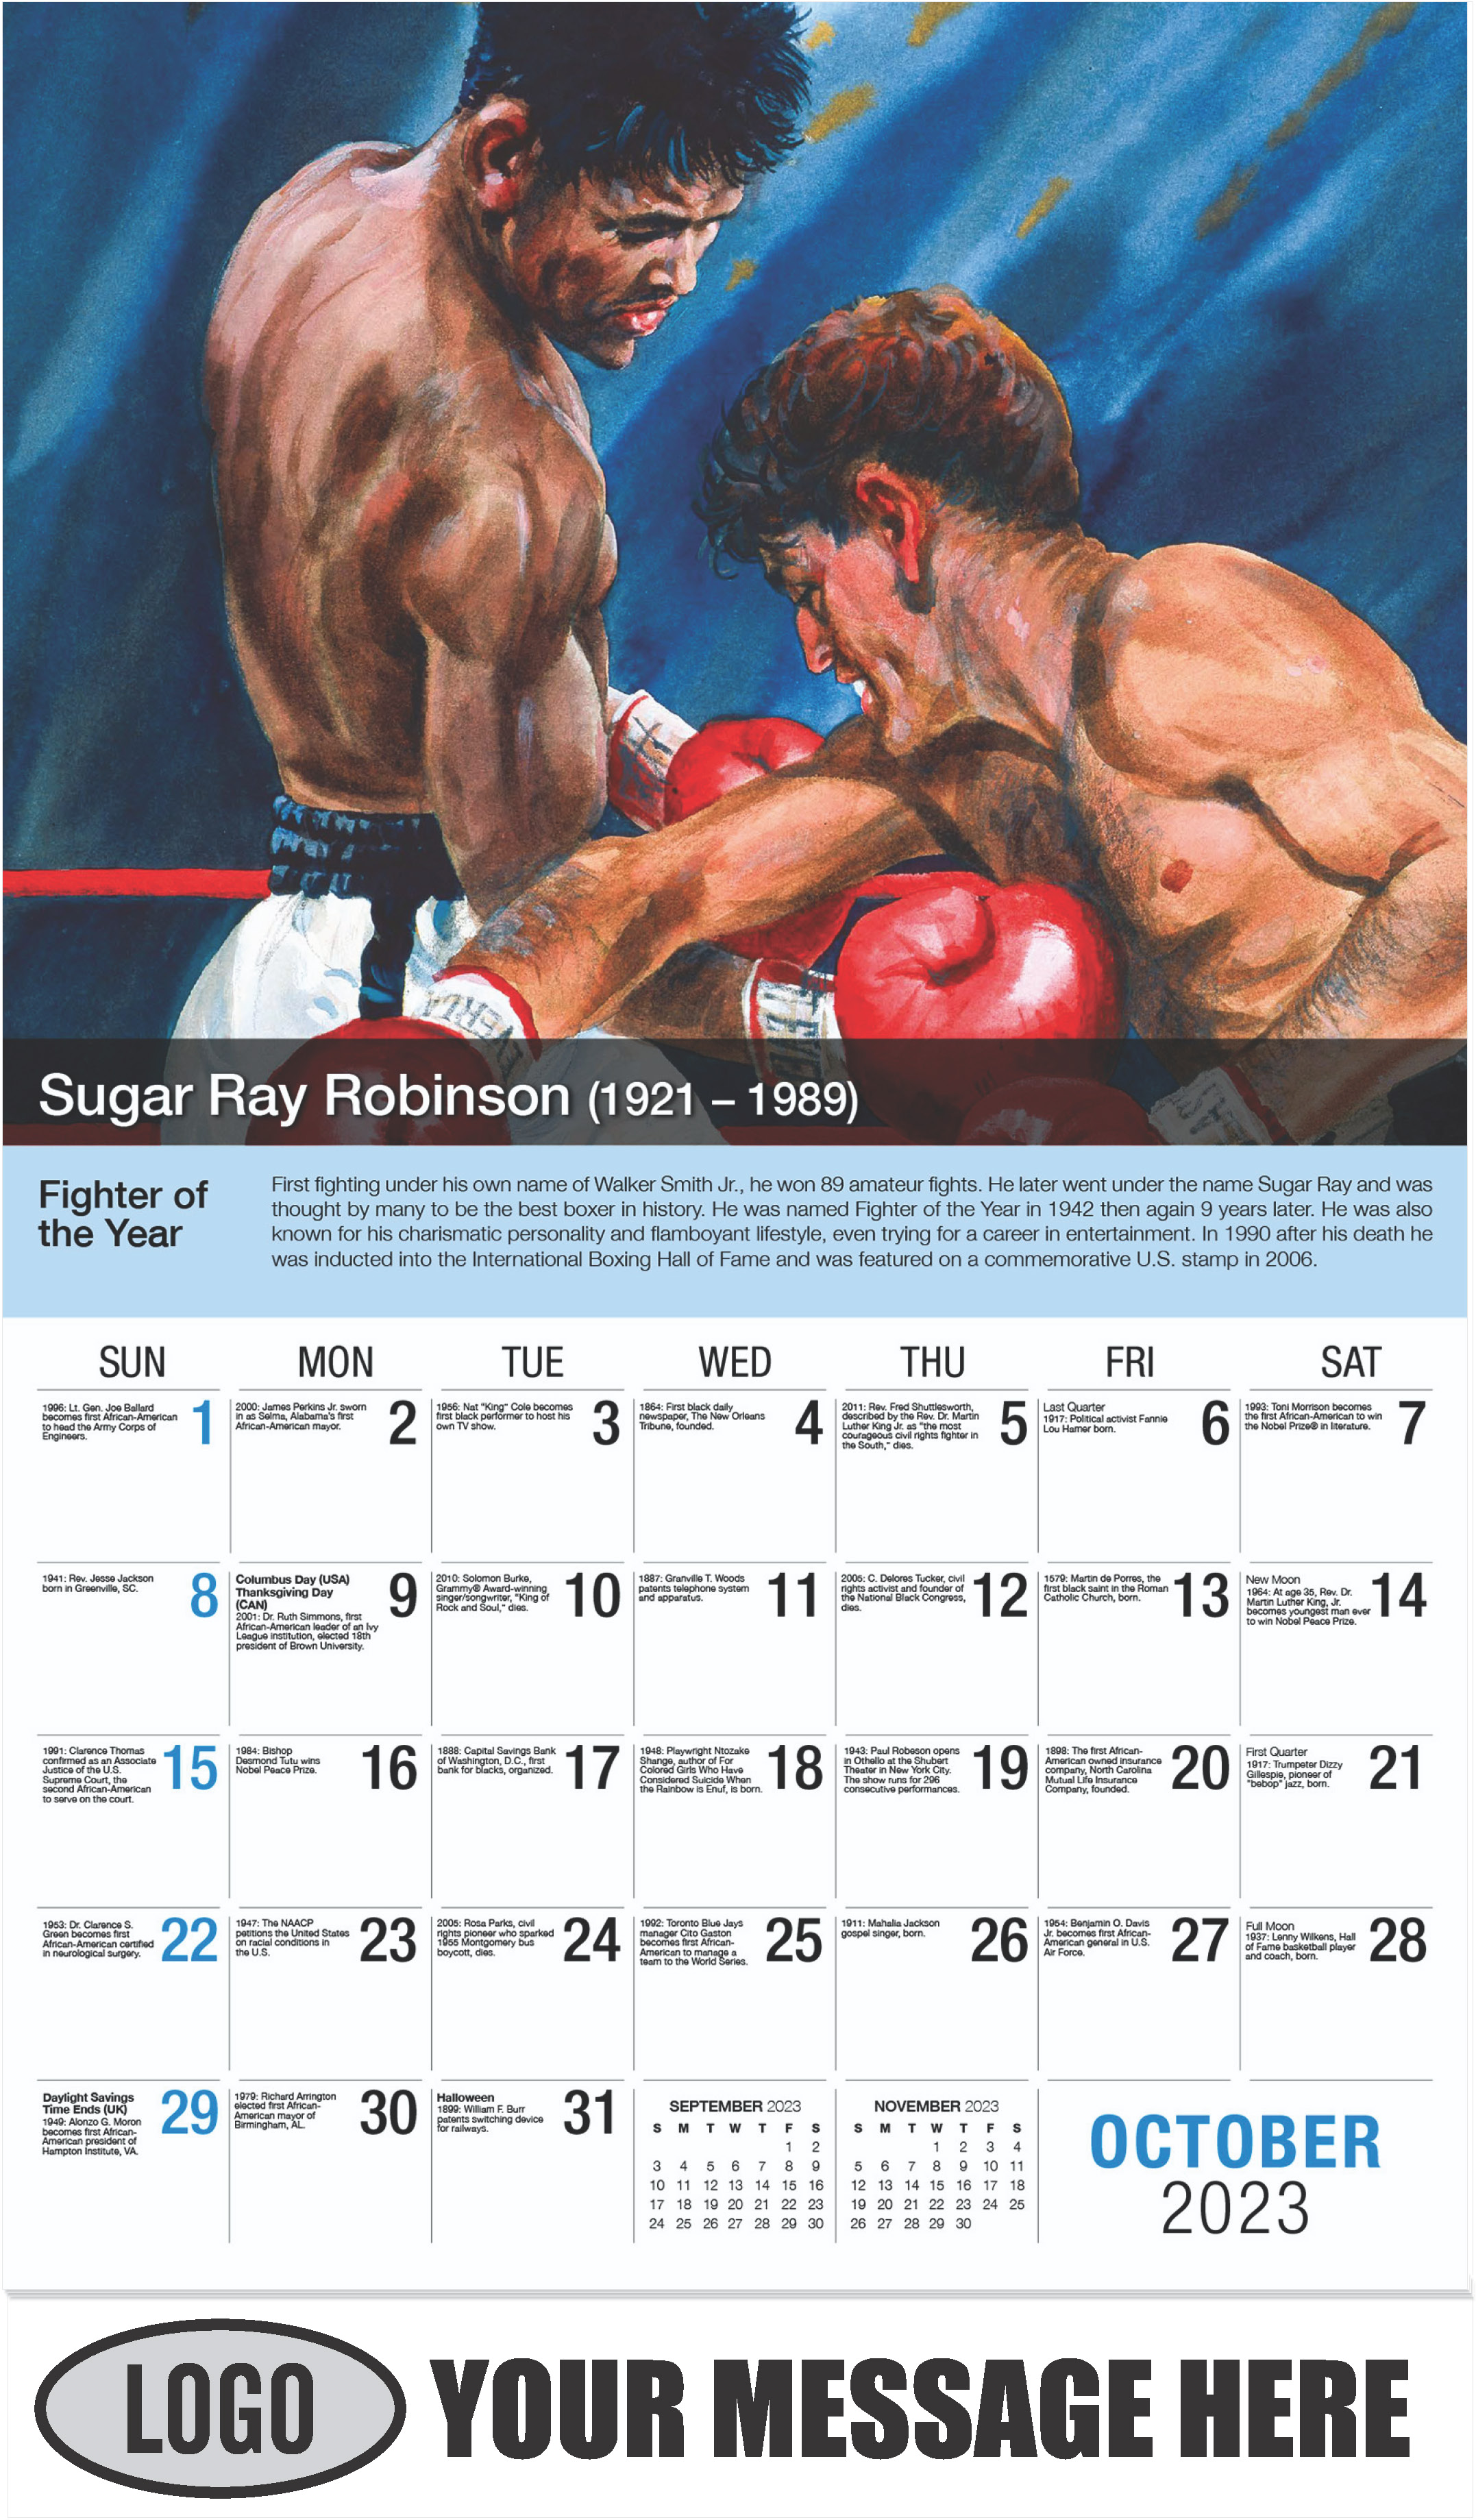 Sugar Ray Robinson - October - Black History 2023 Promotional Calendar